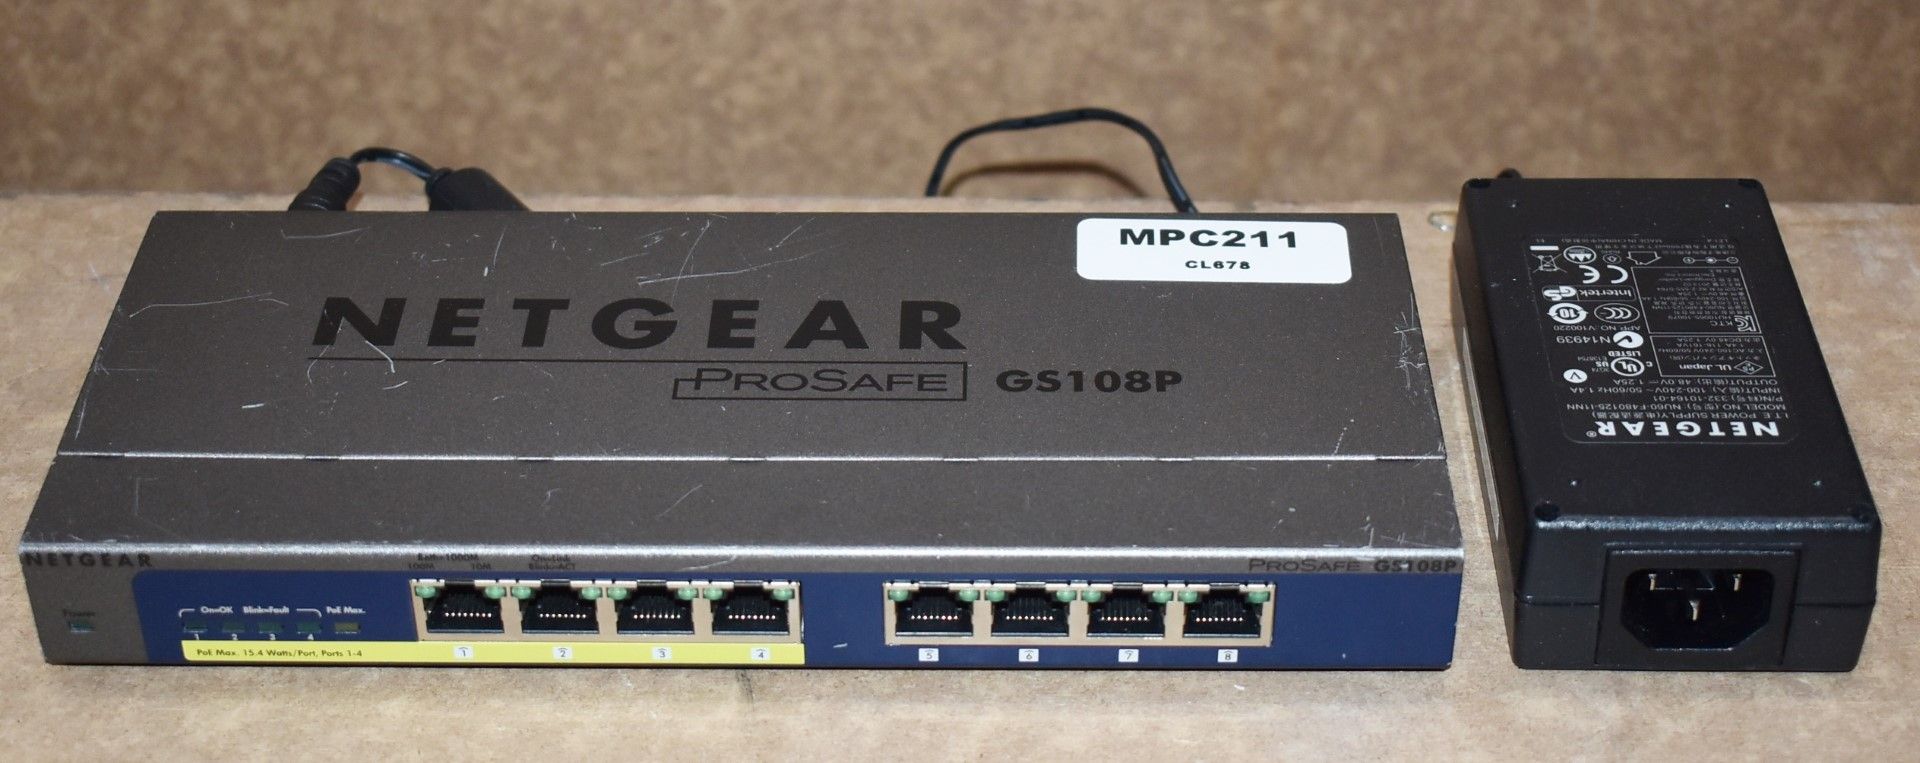 1 x Netgear GS108P ProSafe 8 Port Gigabit Switch with PoE - Ref: MPC211 P1 - CL678 - Location: